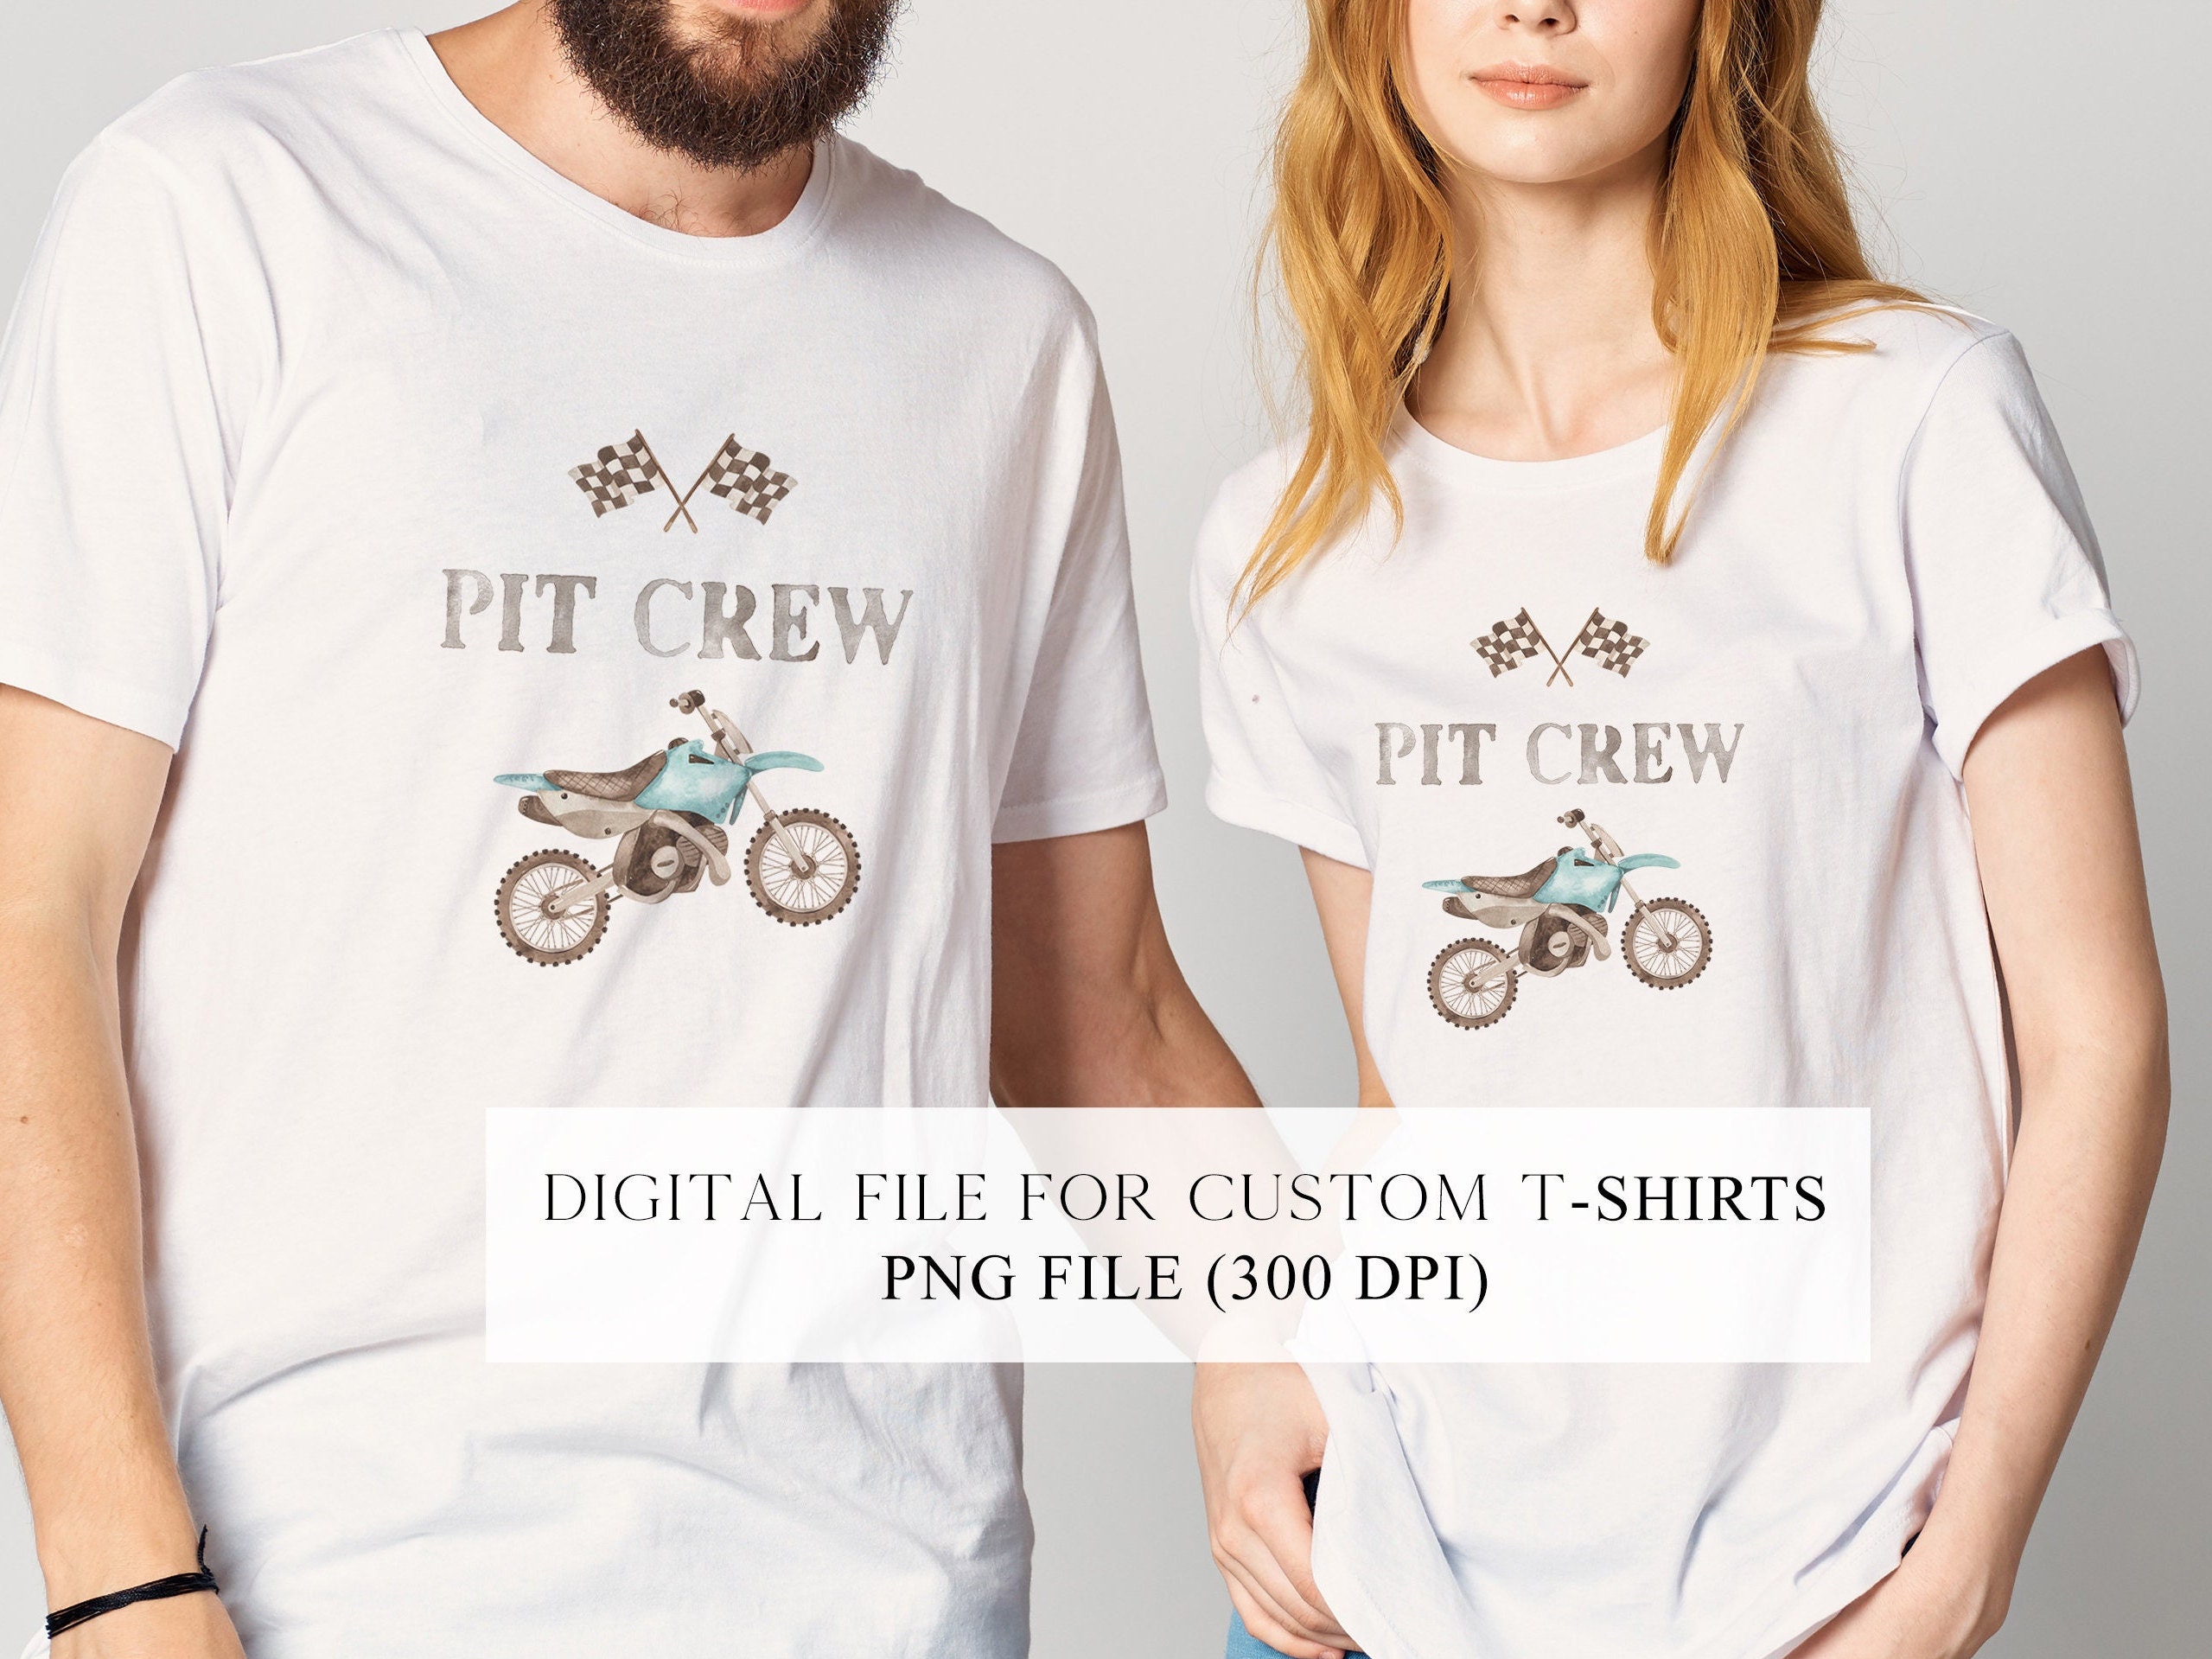 Moto Cross print ready vector t shirt design - Buy t-shirt designs